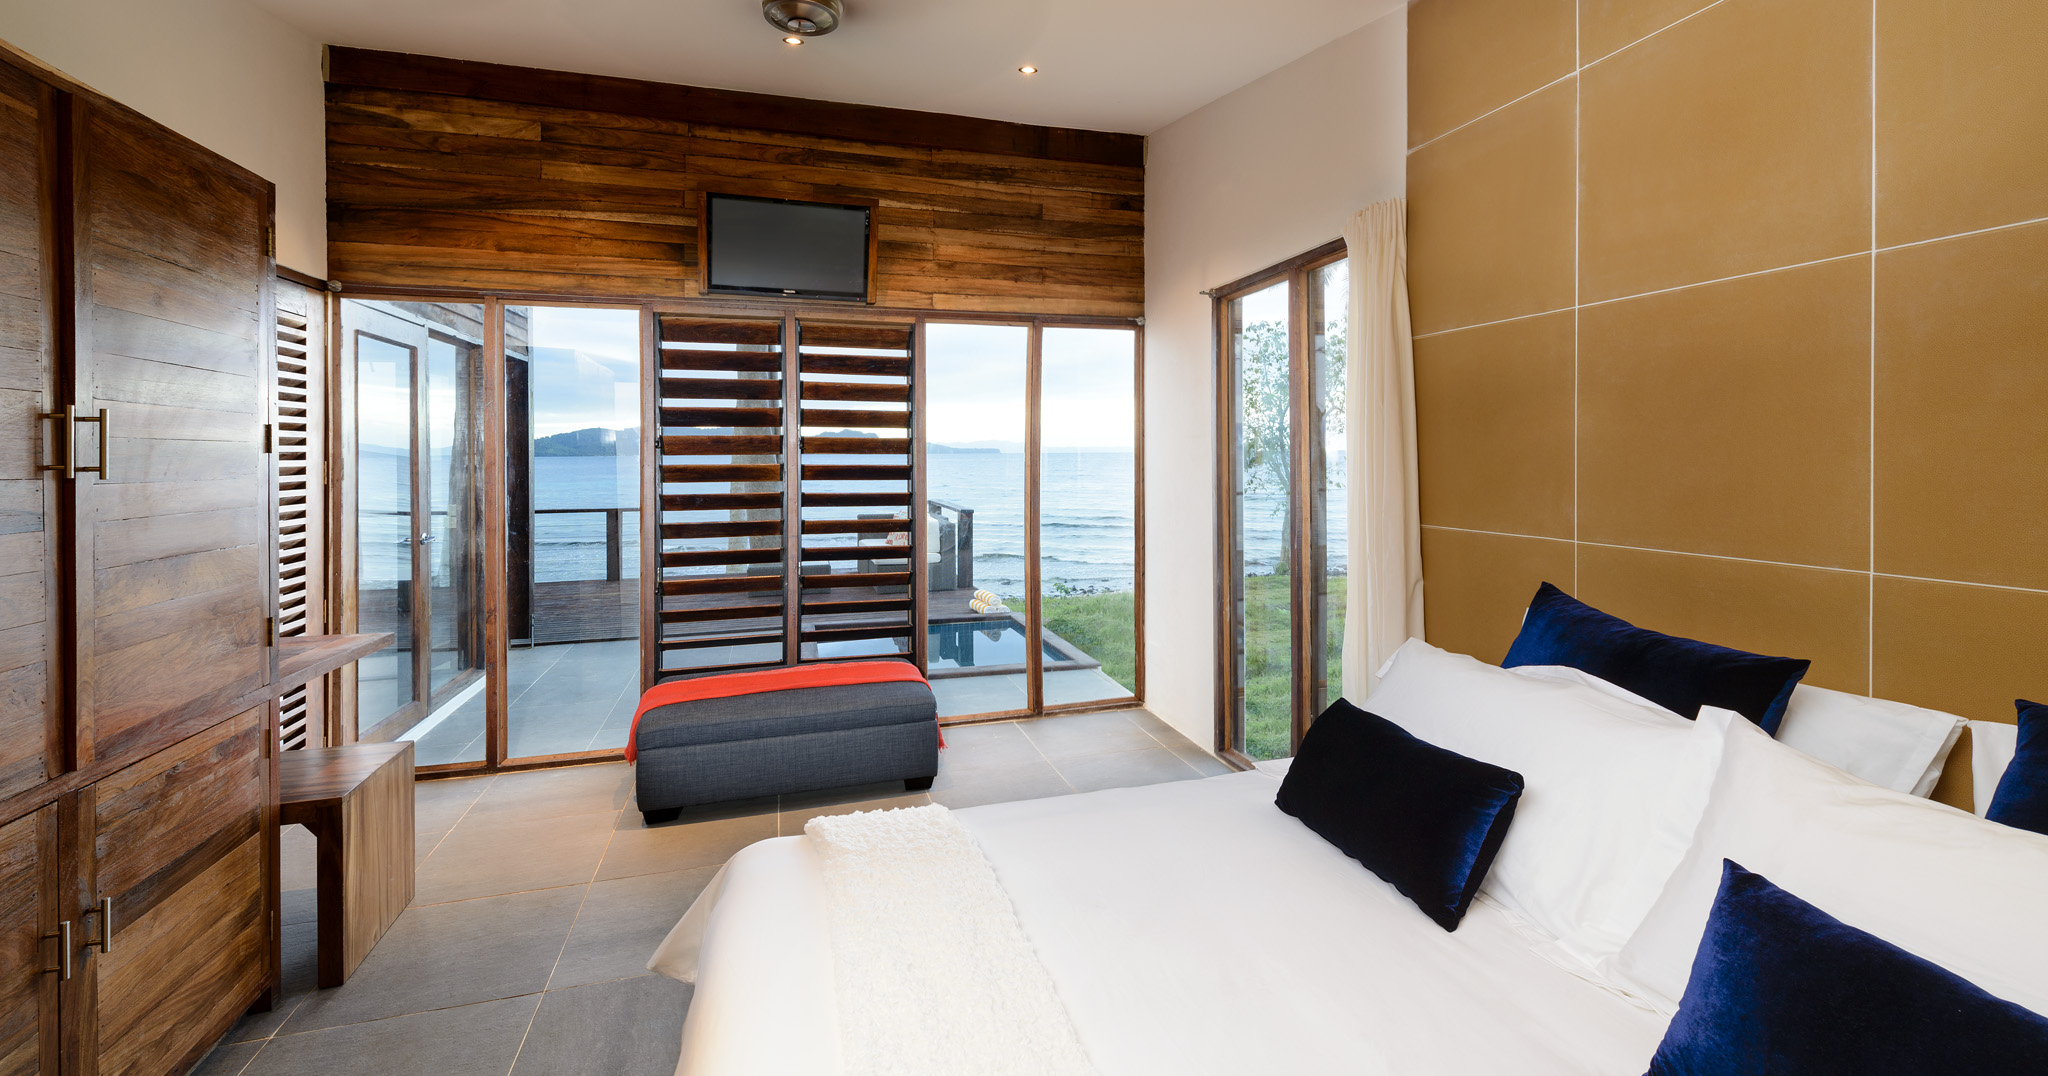 Two-bedroom Villa - Bedroom Views, The Remote Resort Fiji Islands 